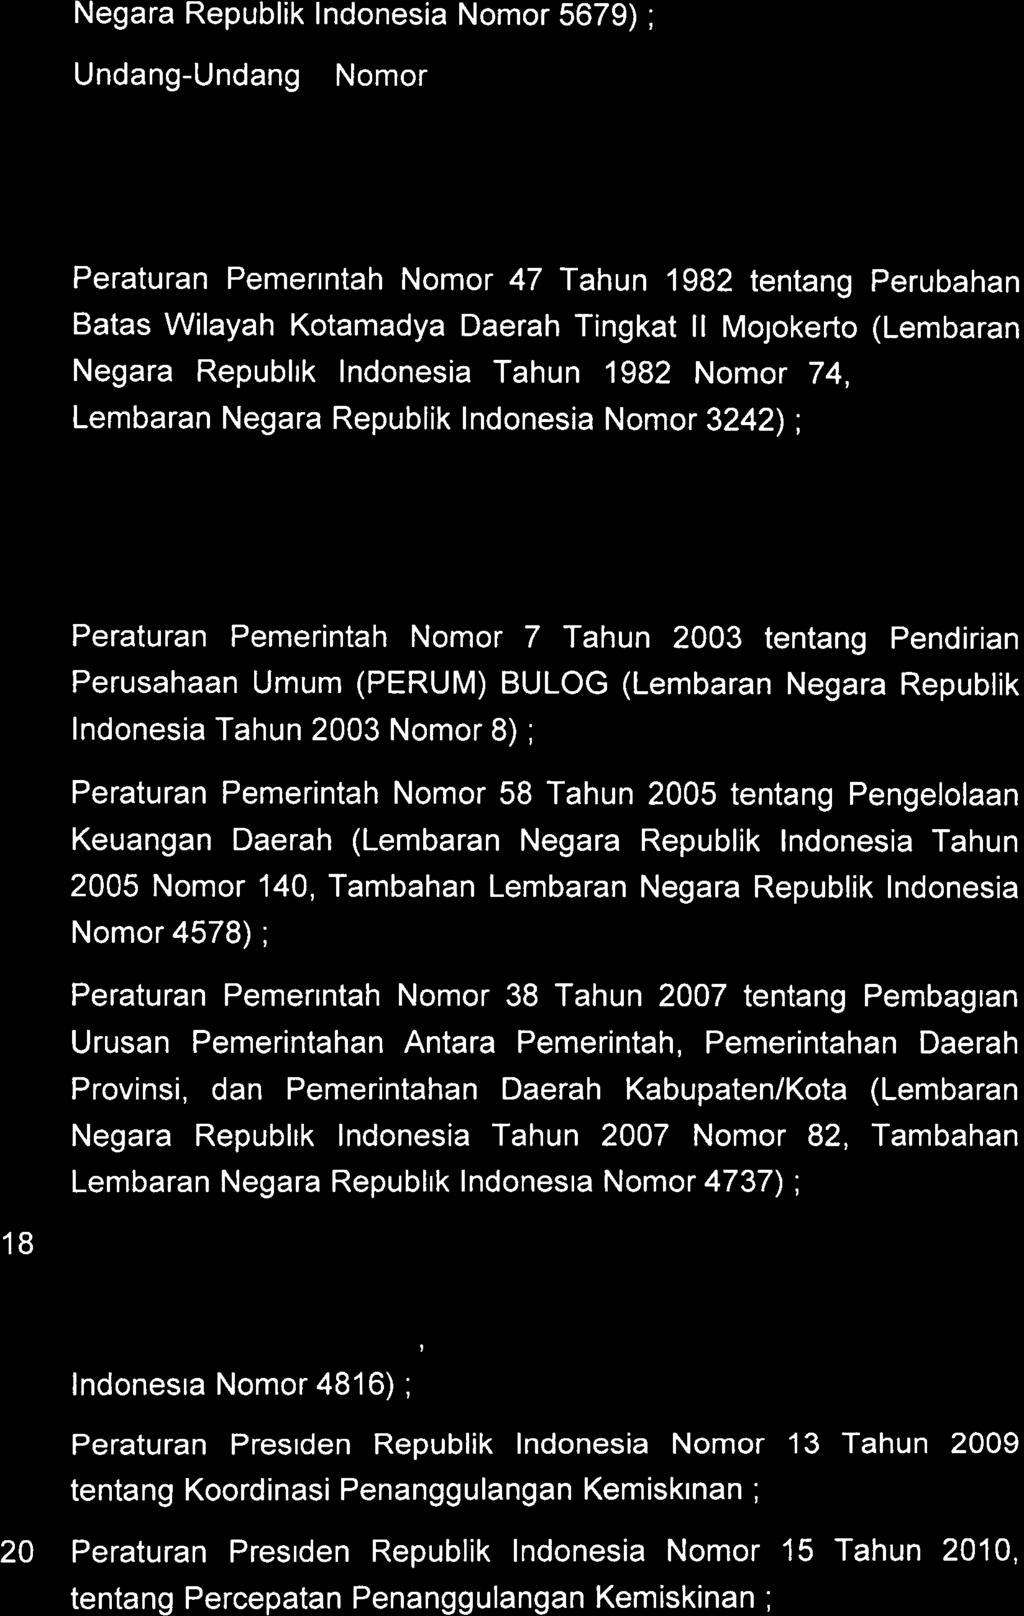 11. Undang-Undang Nomor 23 Tahun 2014 tentang Pemerintahan Daerah (Lembaran Negara Republik Indonesia Tahun 2014 Nomor 244, Tambahan Lembaran Negara Republik Indonesia Nomor 5587) sebagaimana telah